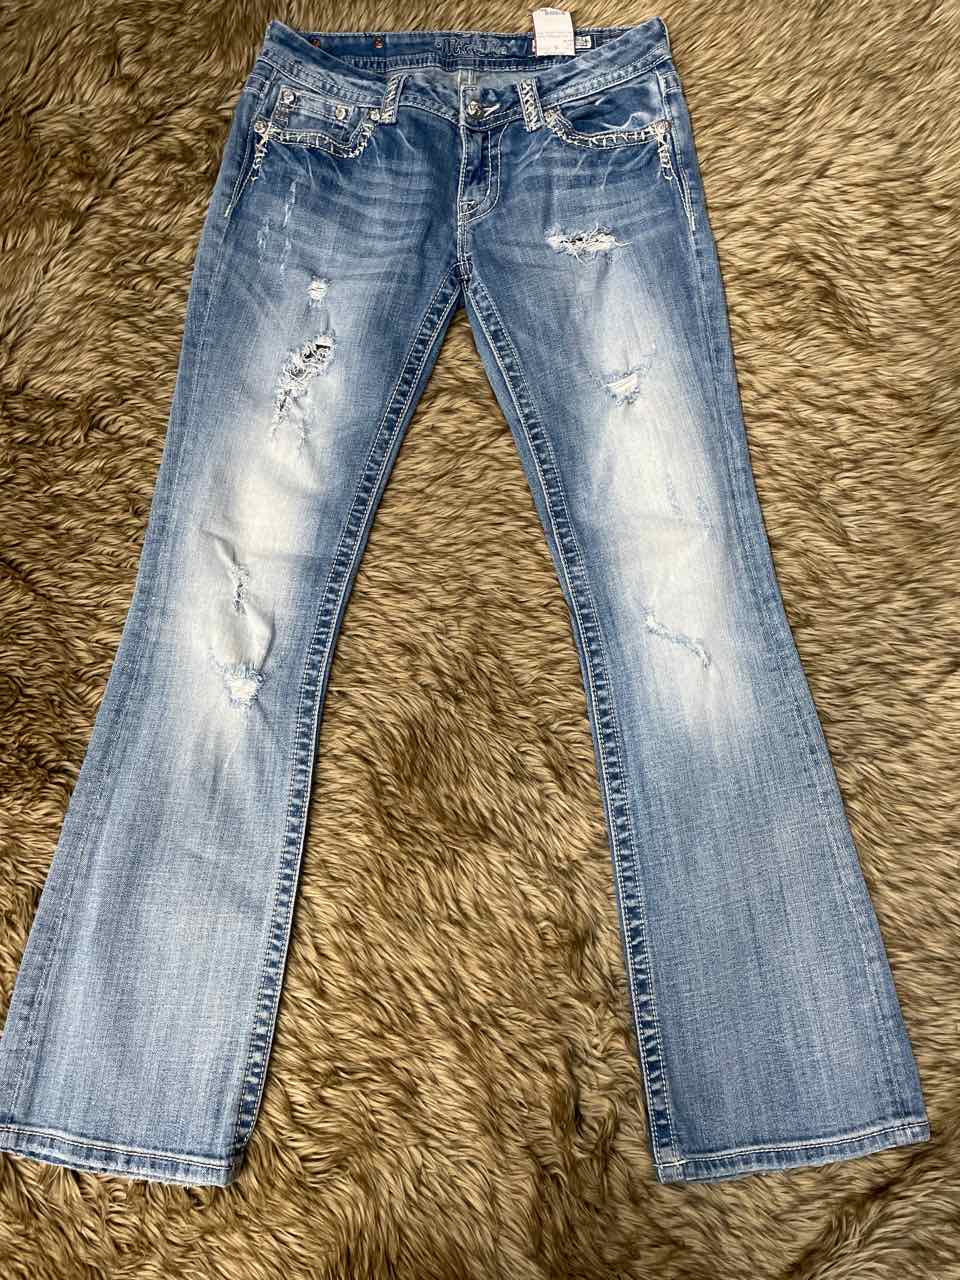 29 - Miss Me Jeans